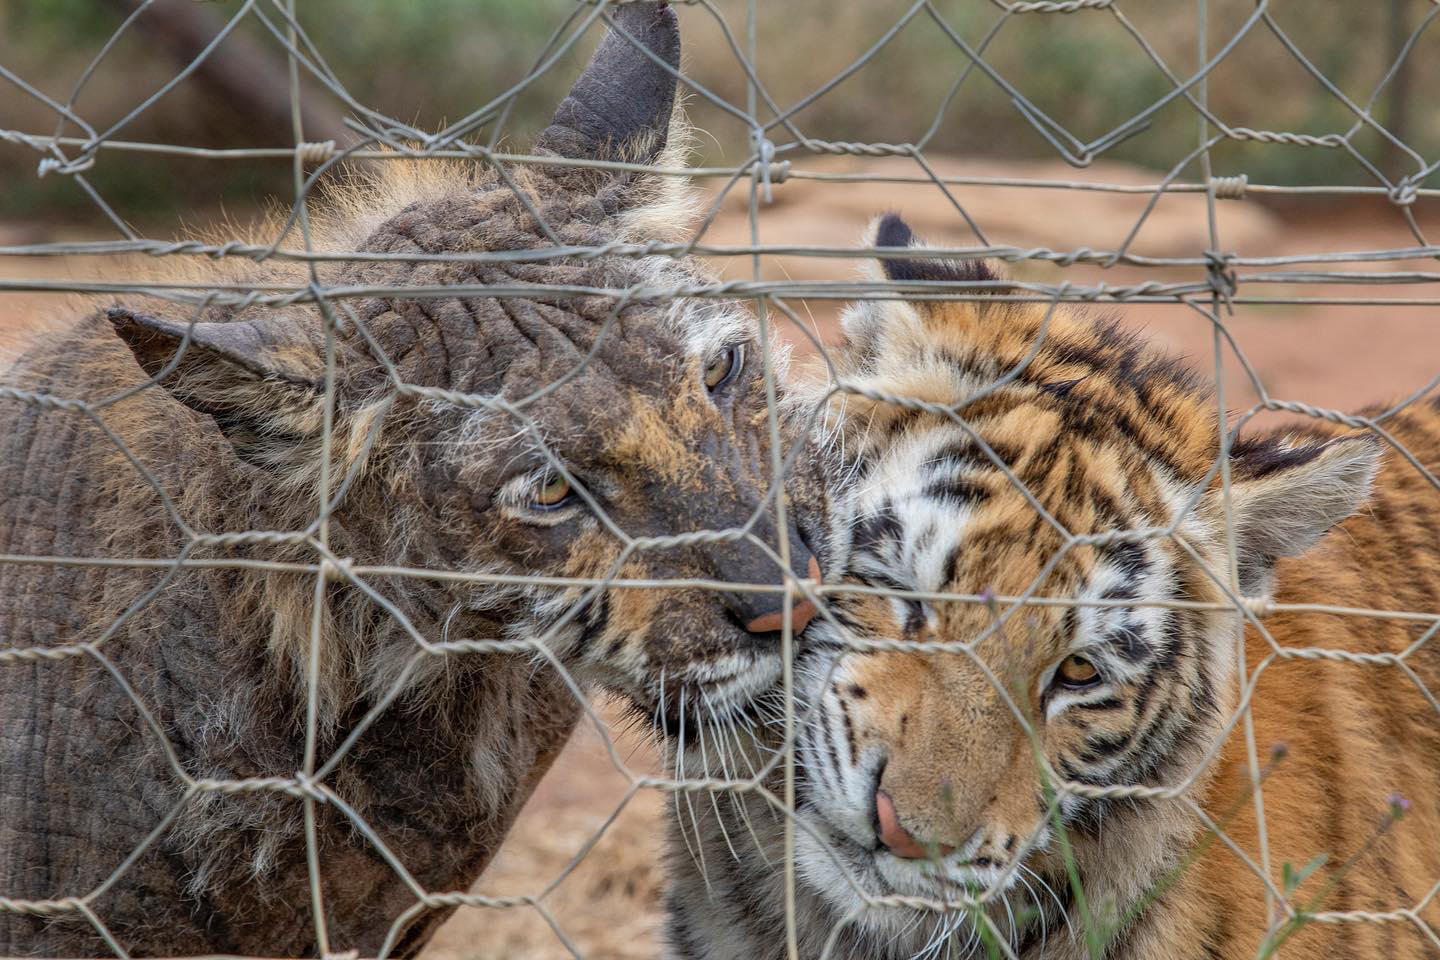 #stevewinterphoto and #alexbraczkowski went to three captive breeding centers across South Africa to